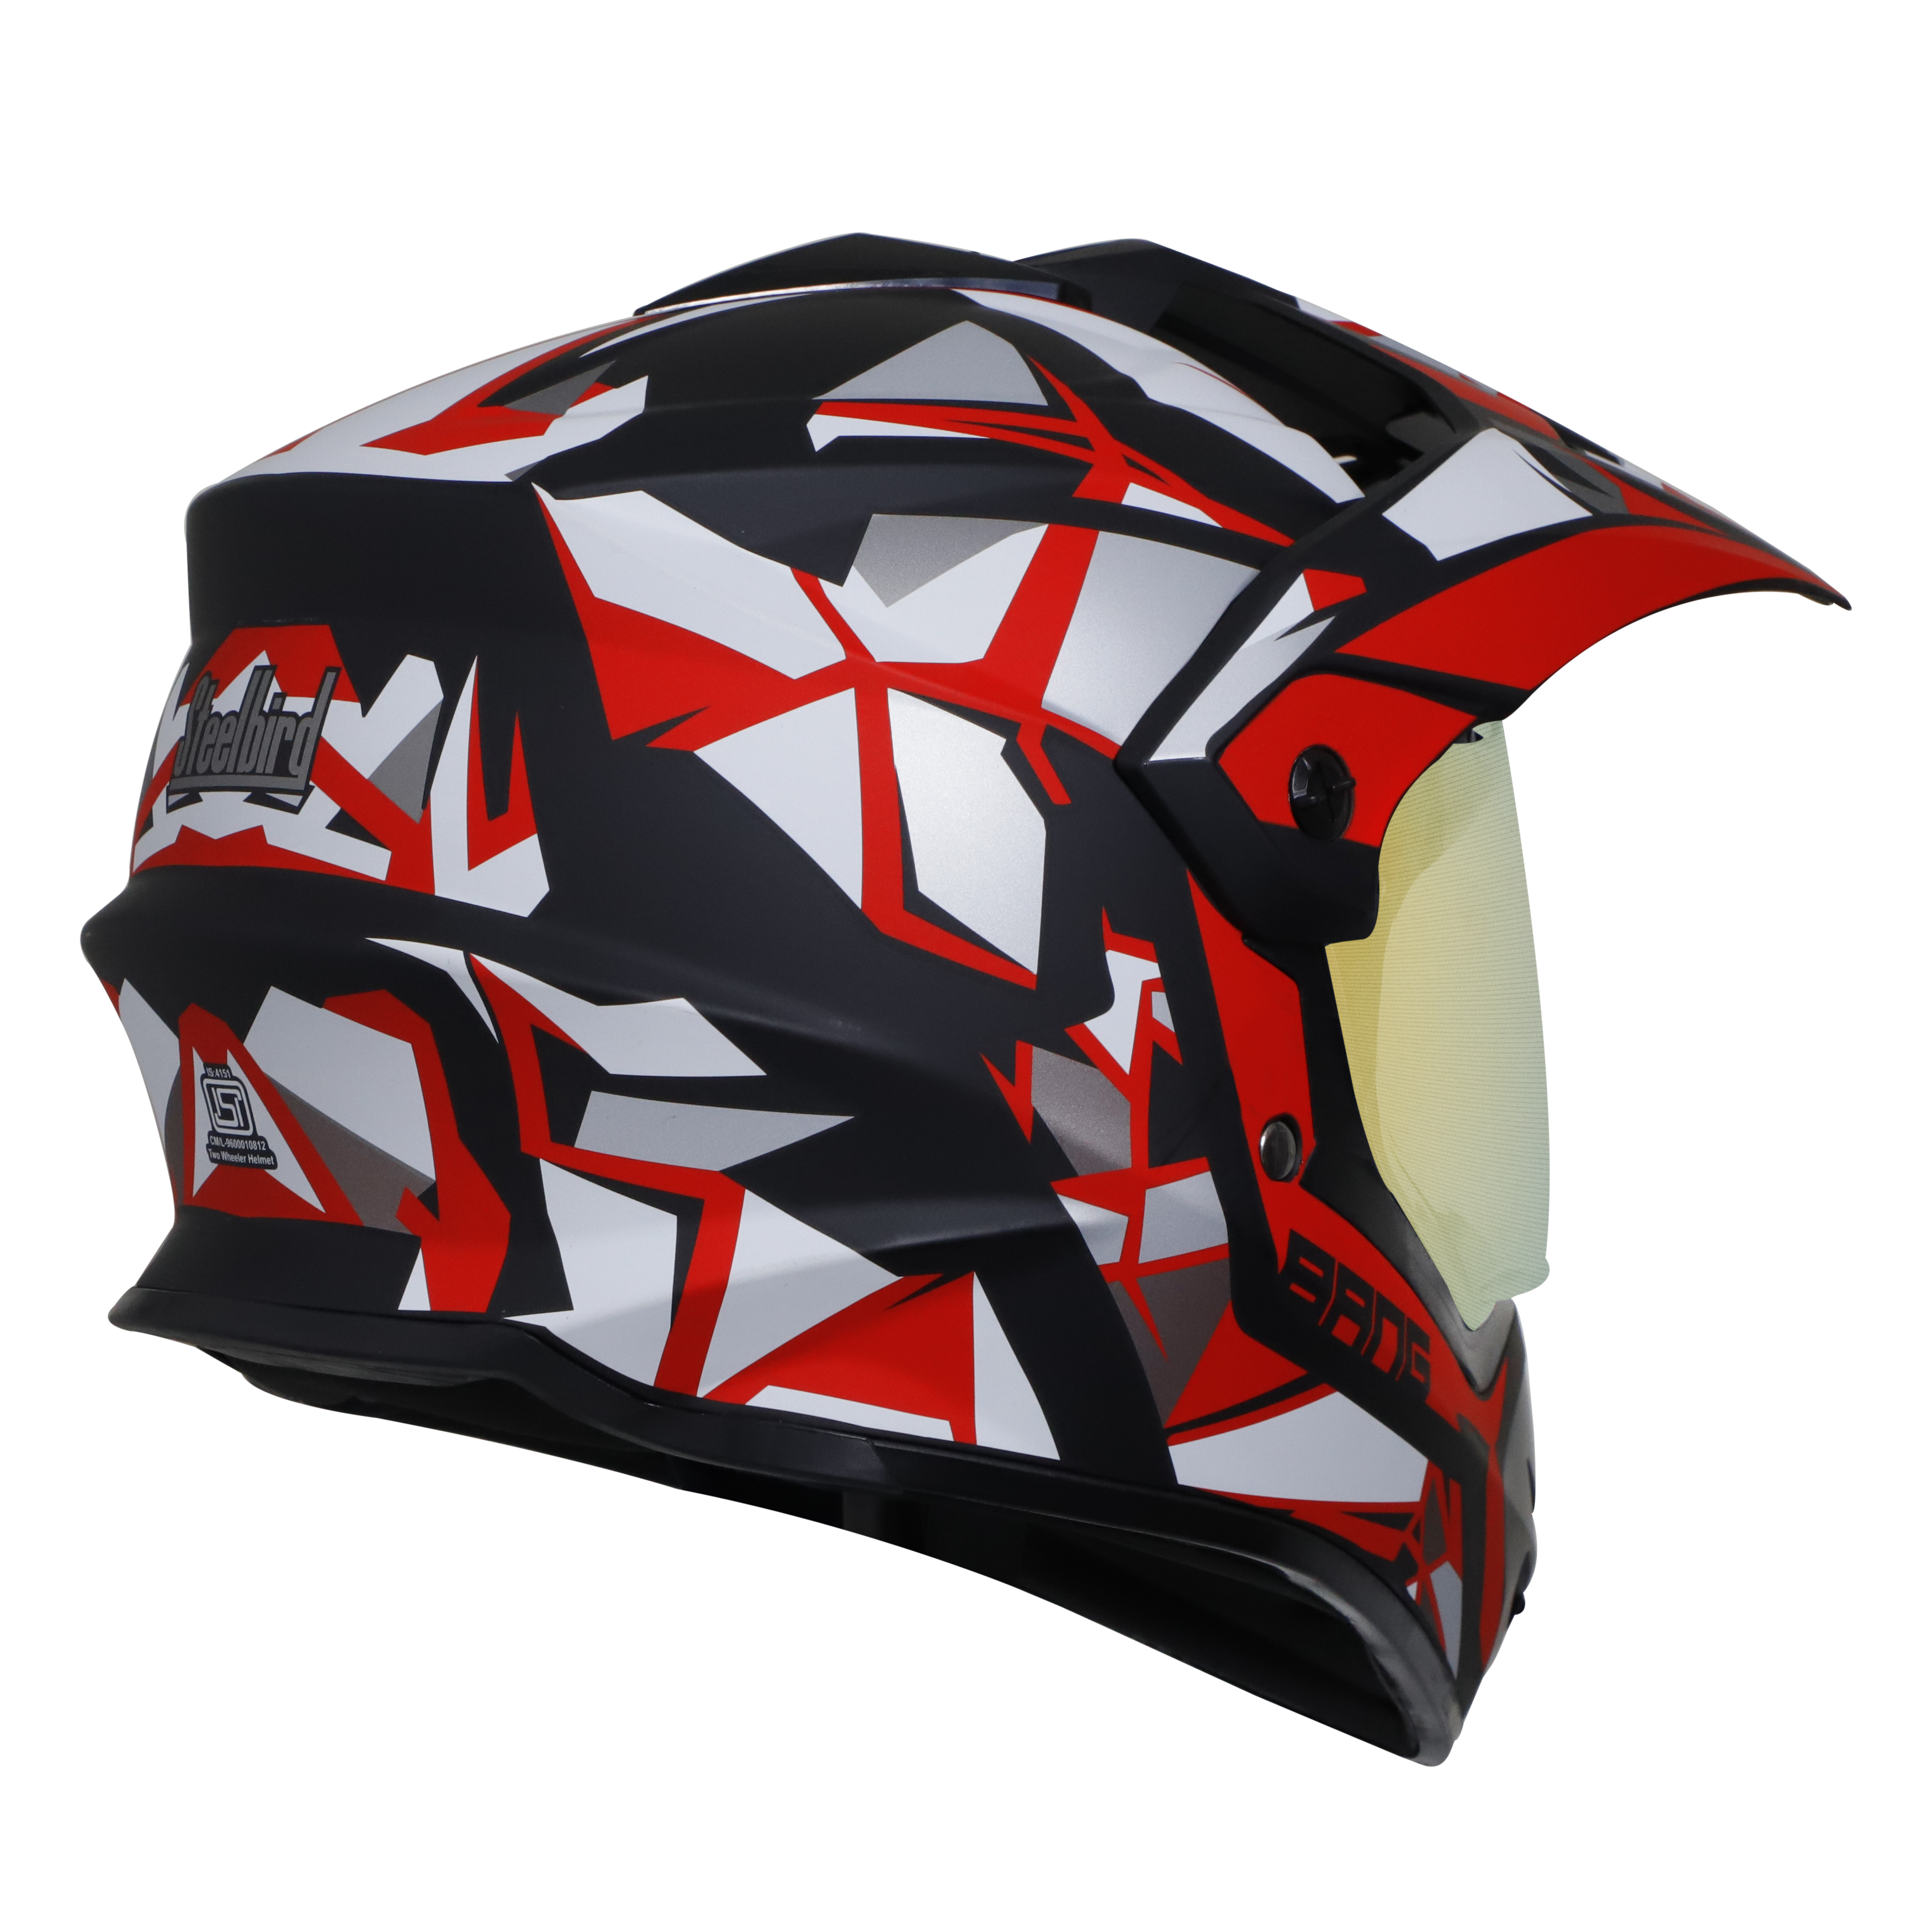 Steelbird Off Road Bang KTN ISI Certified ABS Material Shell Motocross Helmet (Matt Black Red With Chrome Gold Visor)